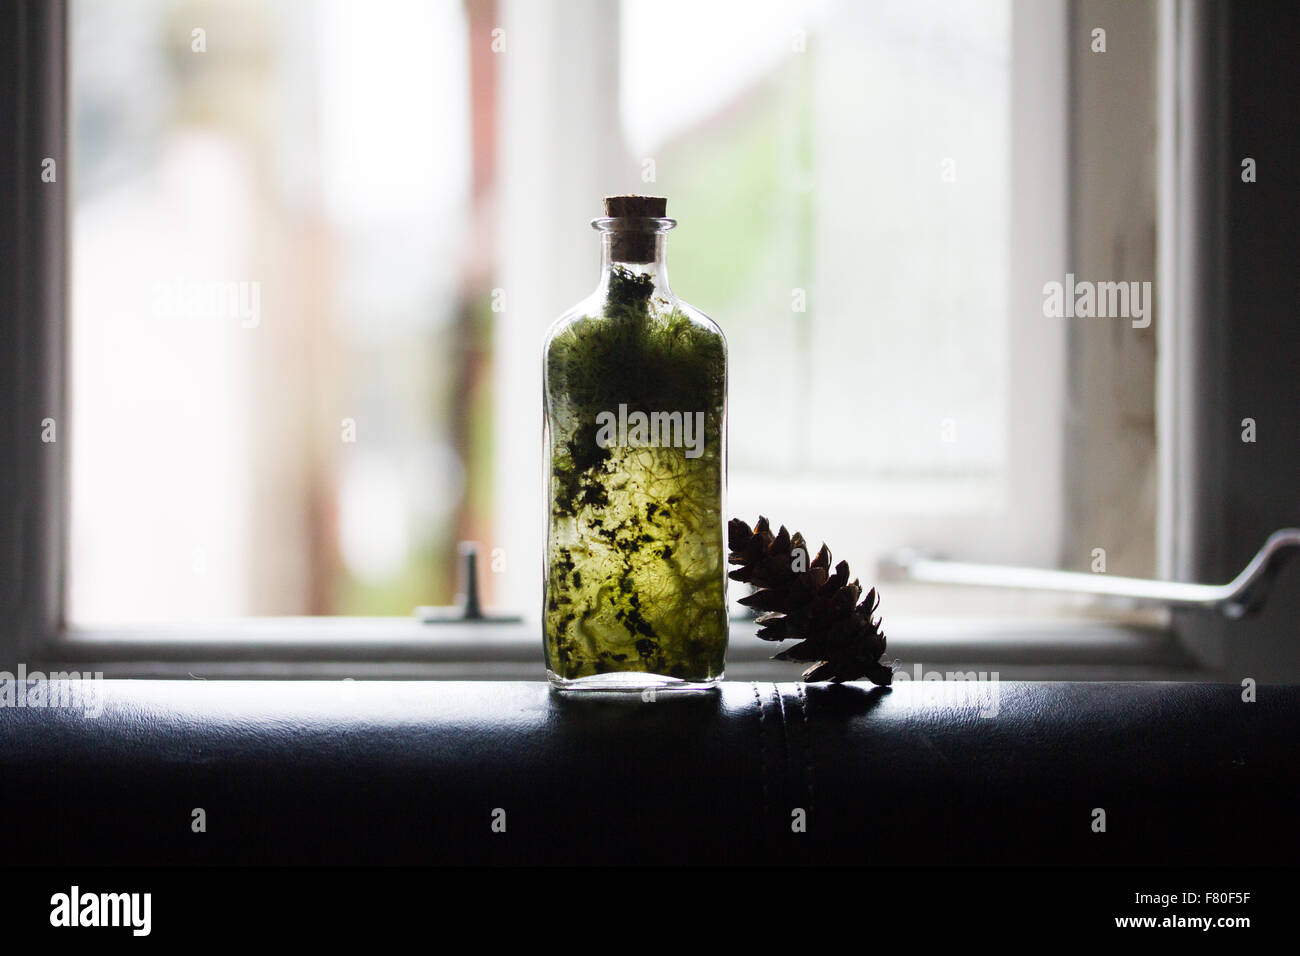 Terrarium in a bottle. Stock Photo